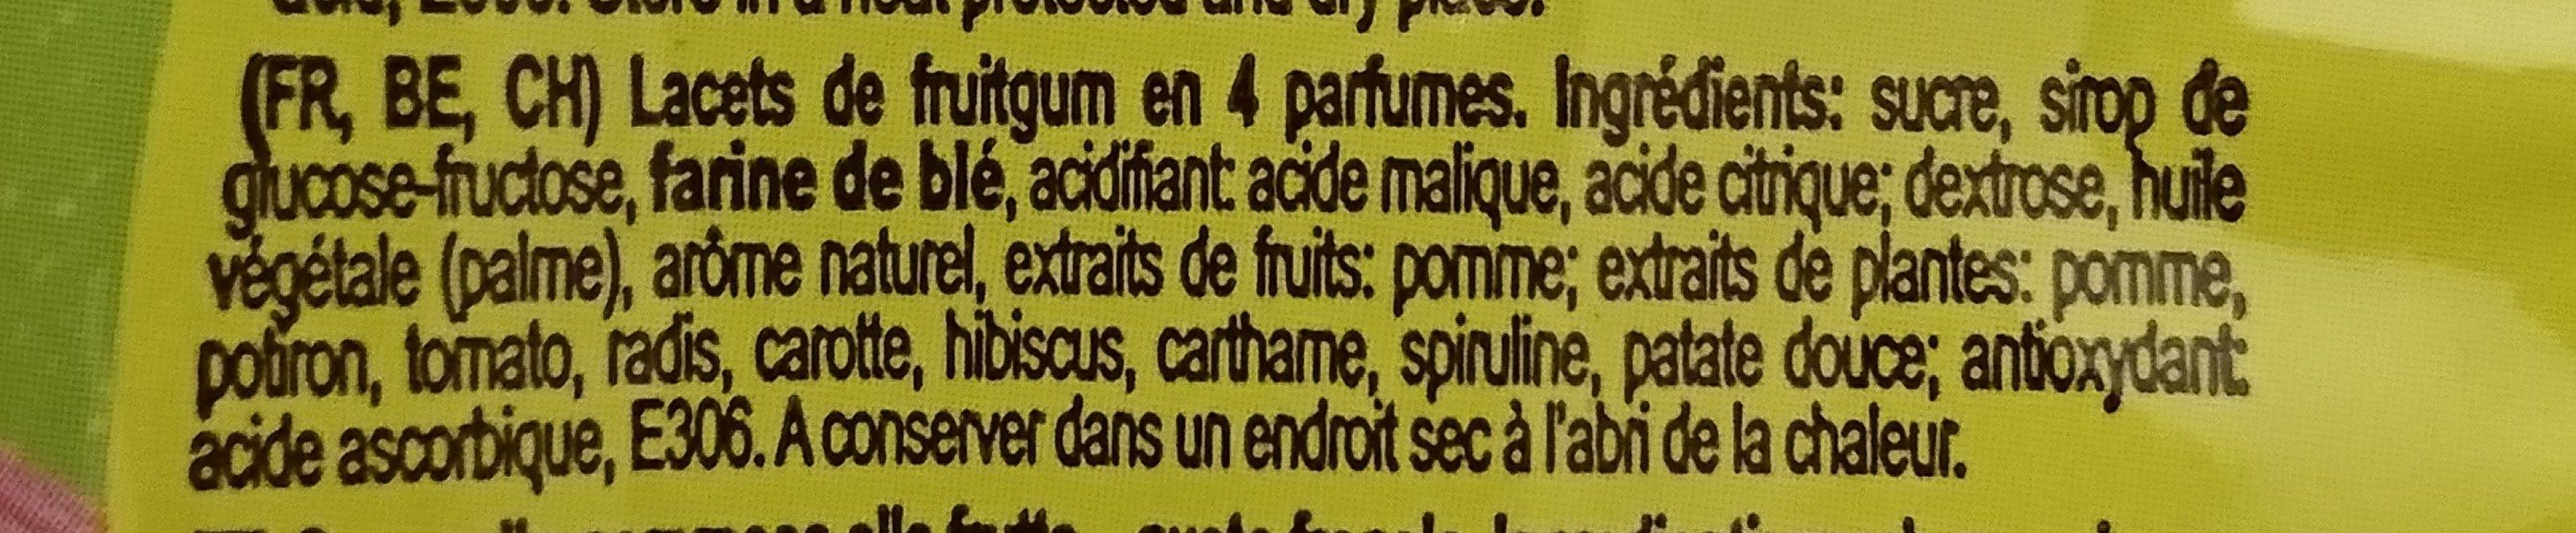 Bunte Drachenzungen, Lacets de fruitsgum en 4 parfumes - Zutaten - fr